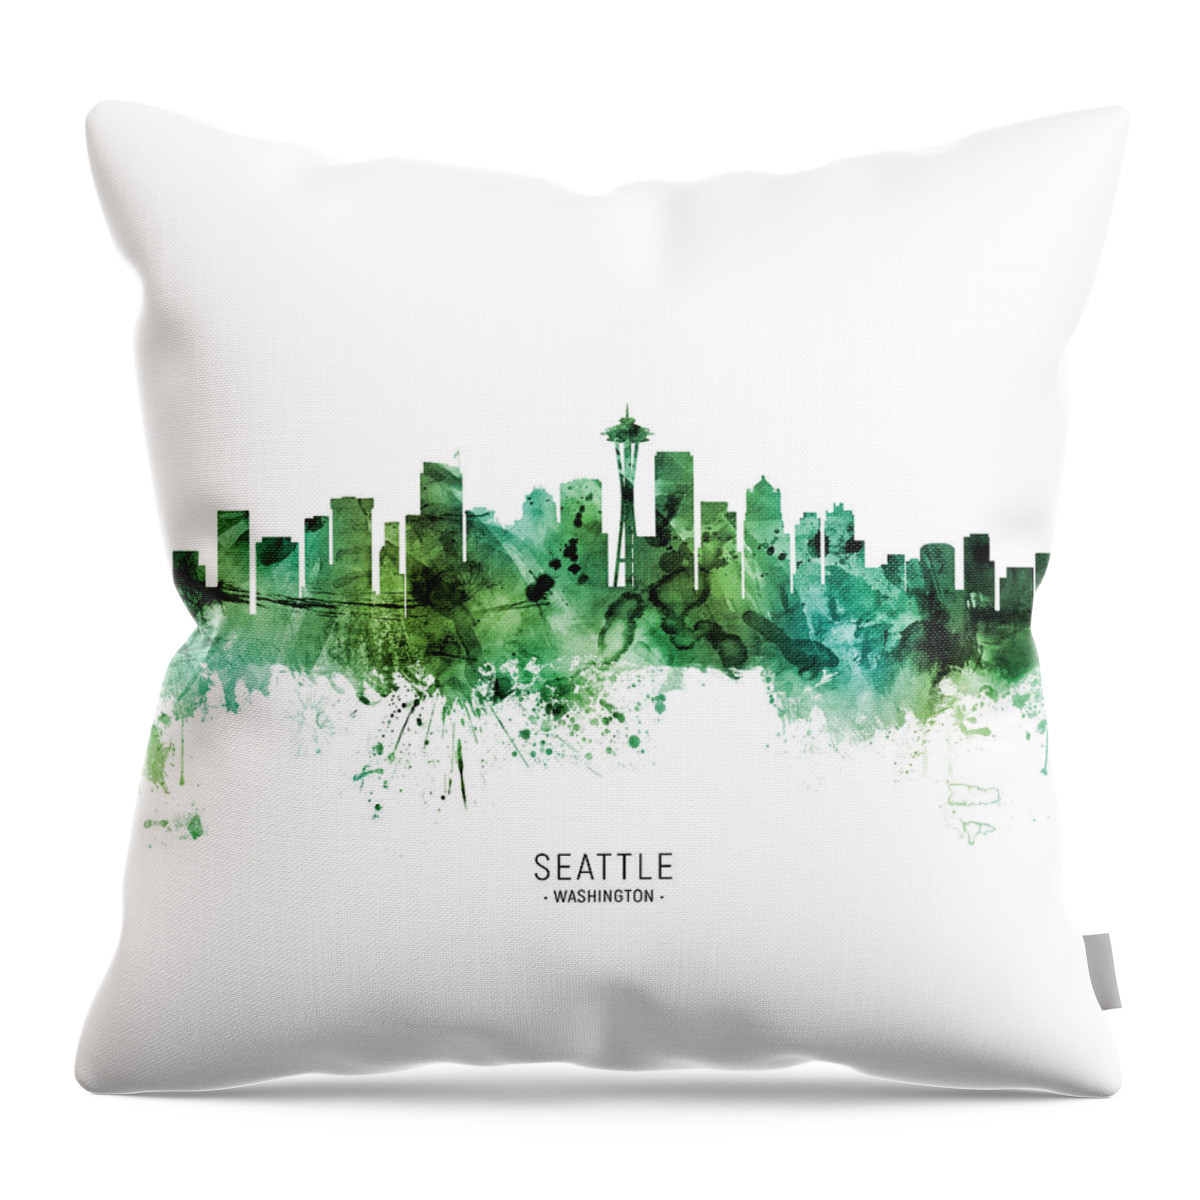 Seattle Throw Pillow featuring the digital art Seattle Washington Skyline #14 by Michael Tompsett